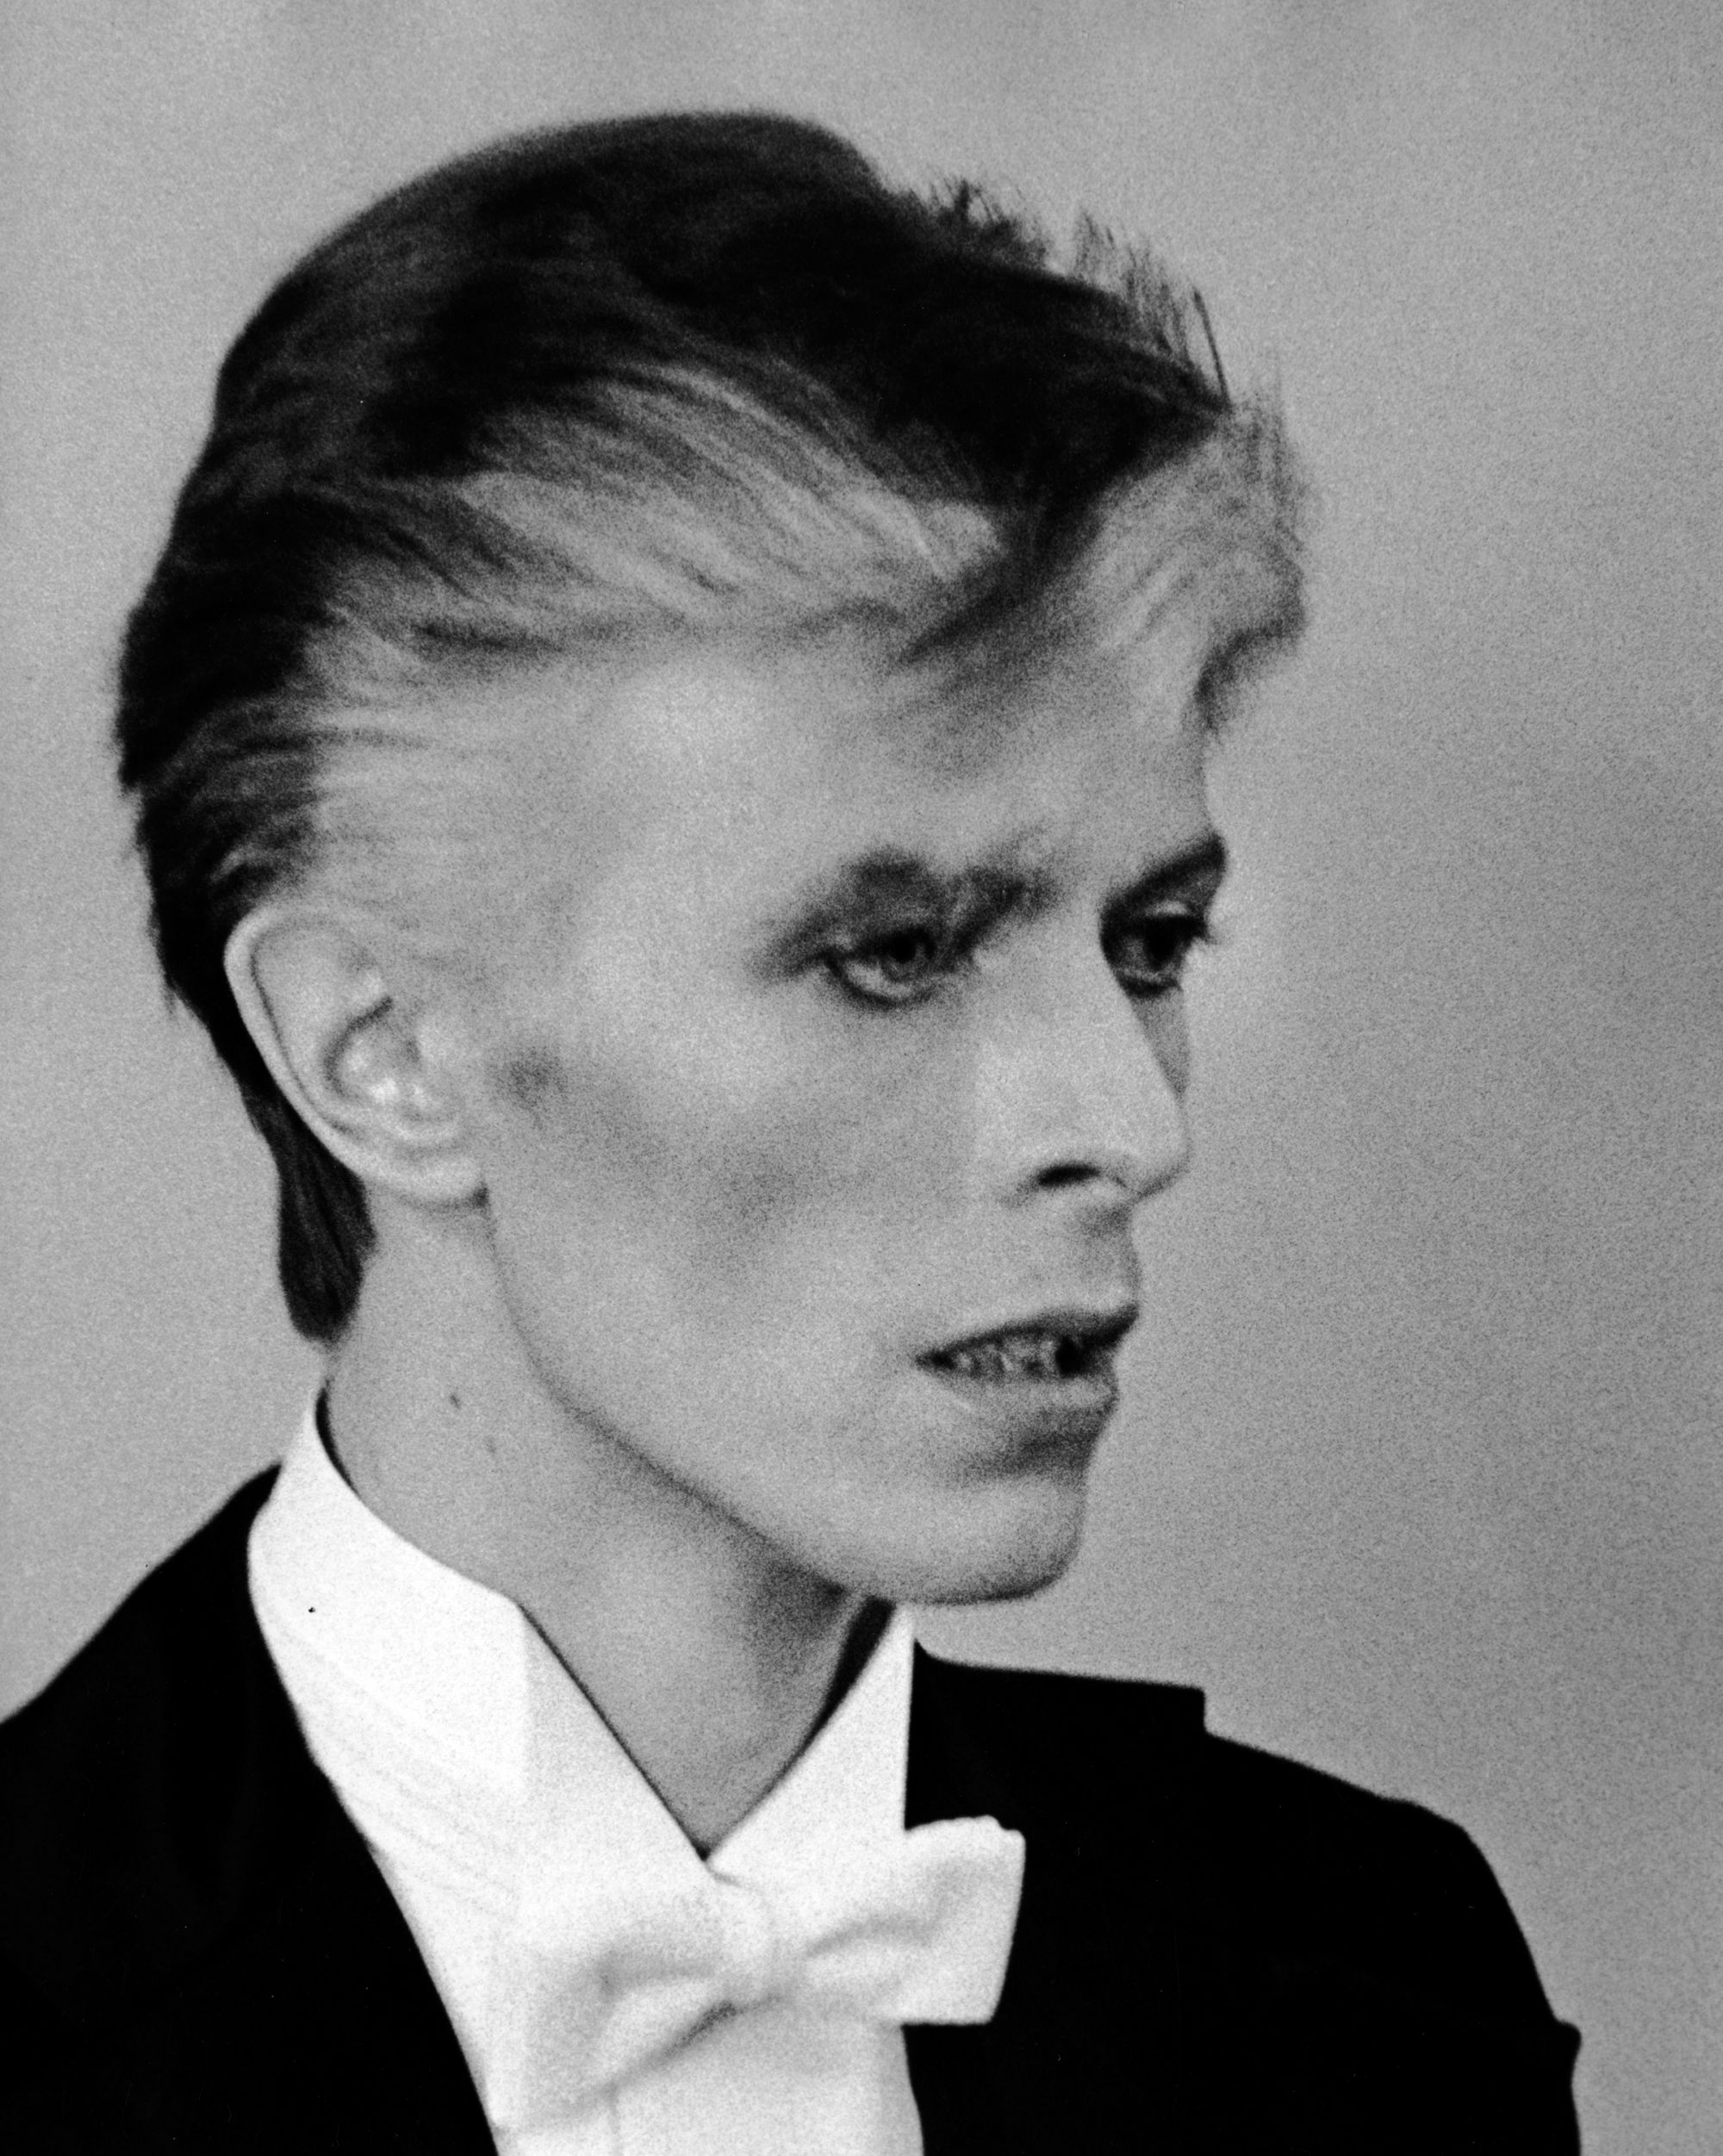 David Bowie en 1975 aux Grammy Awards